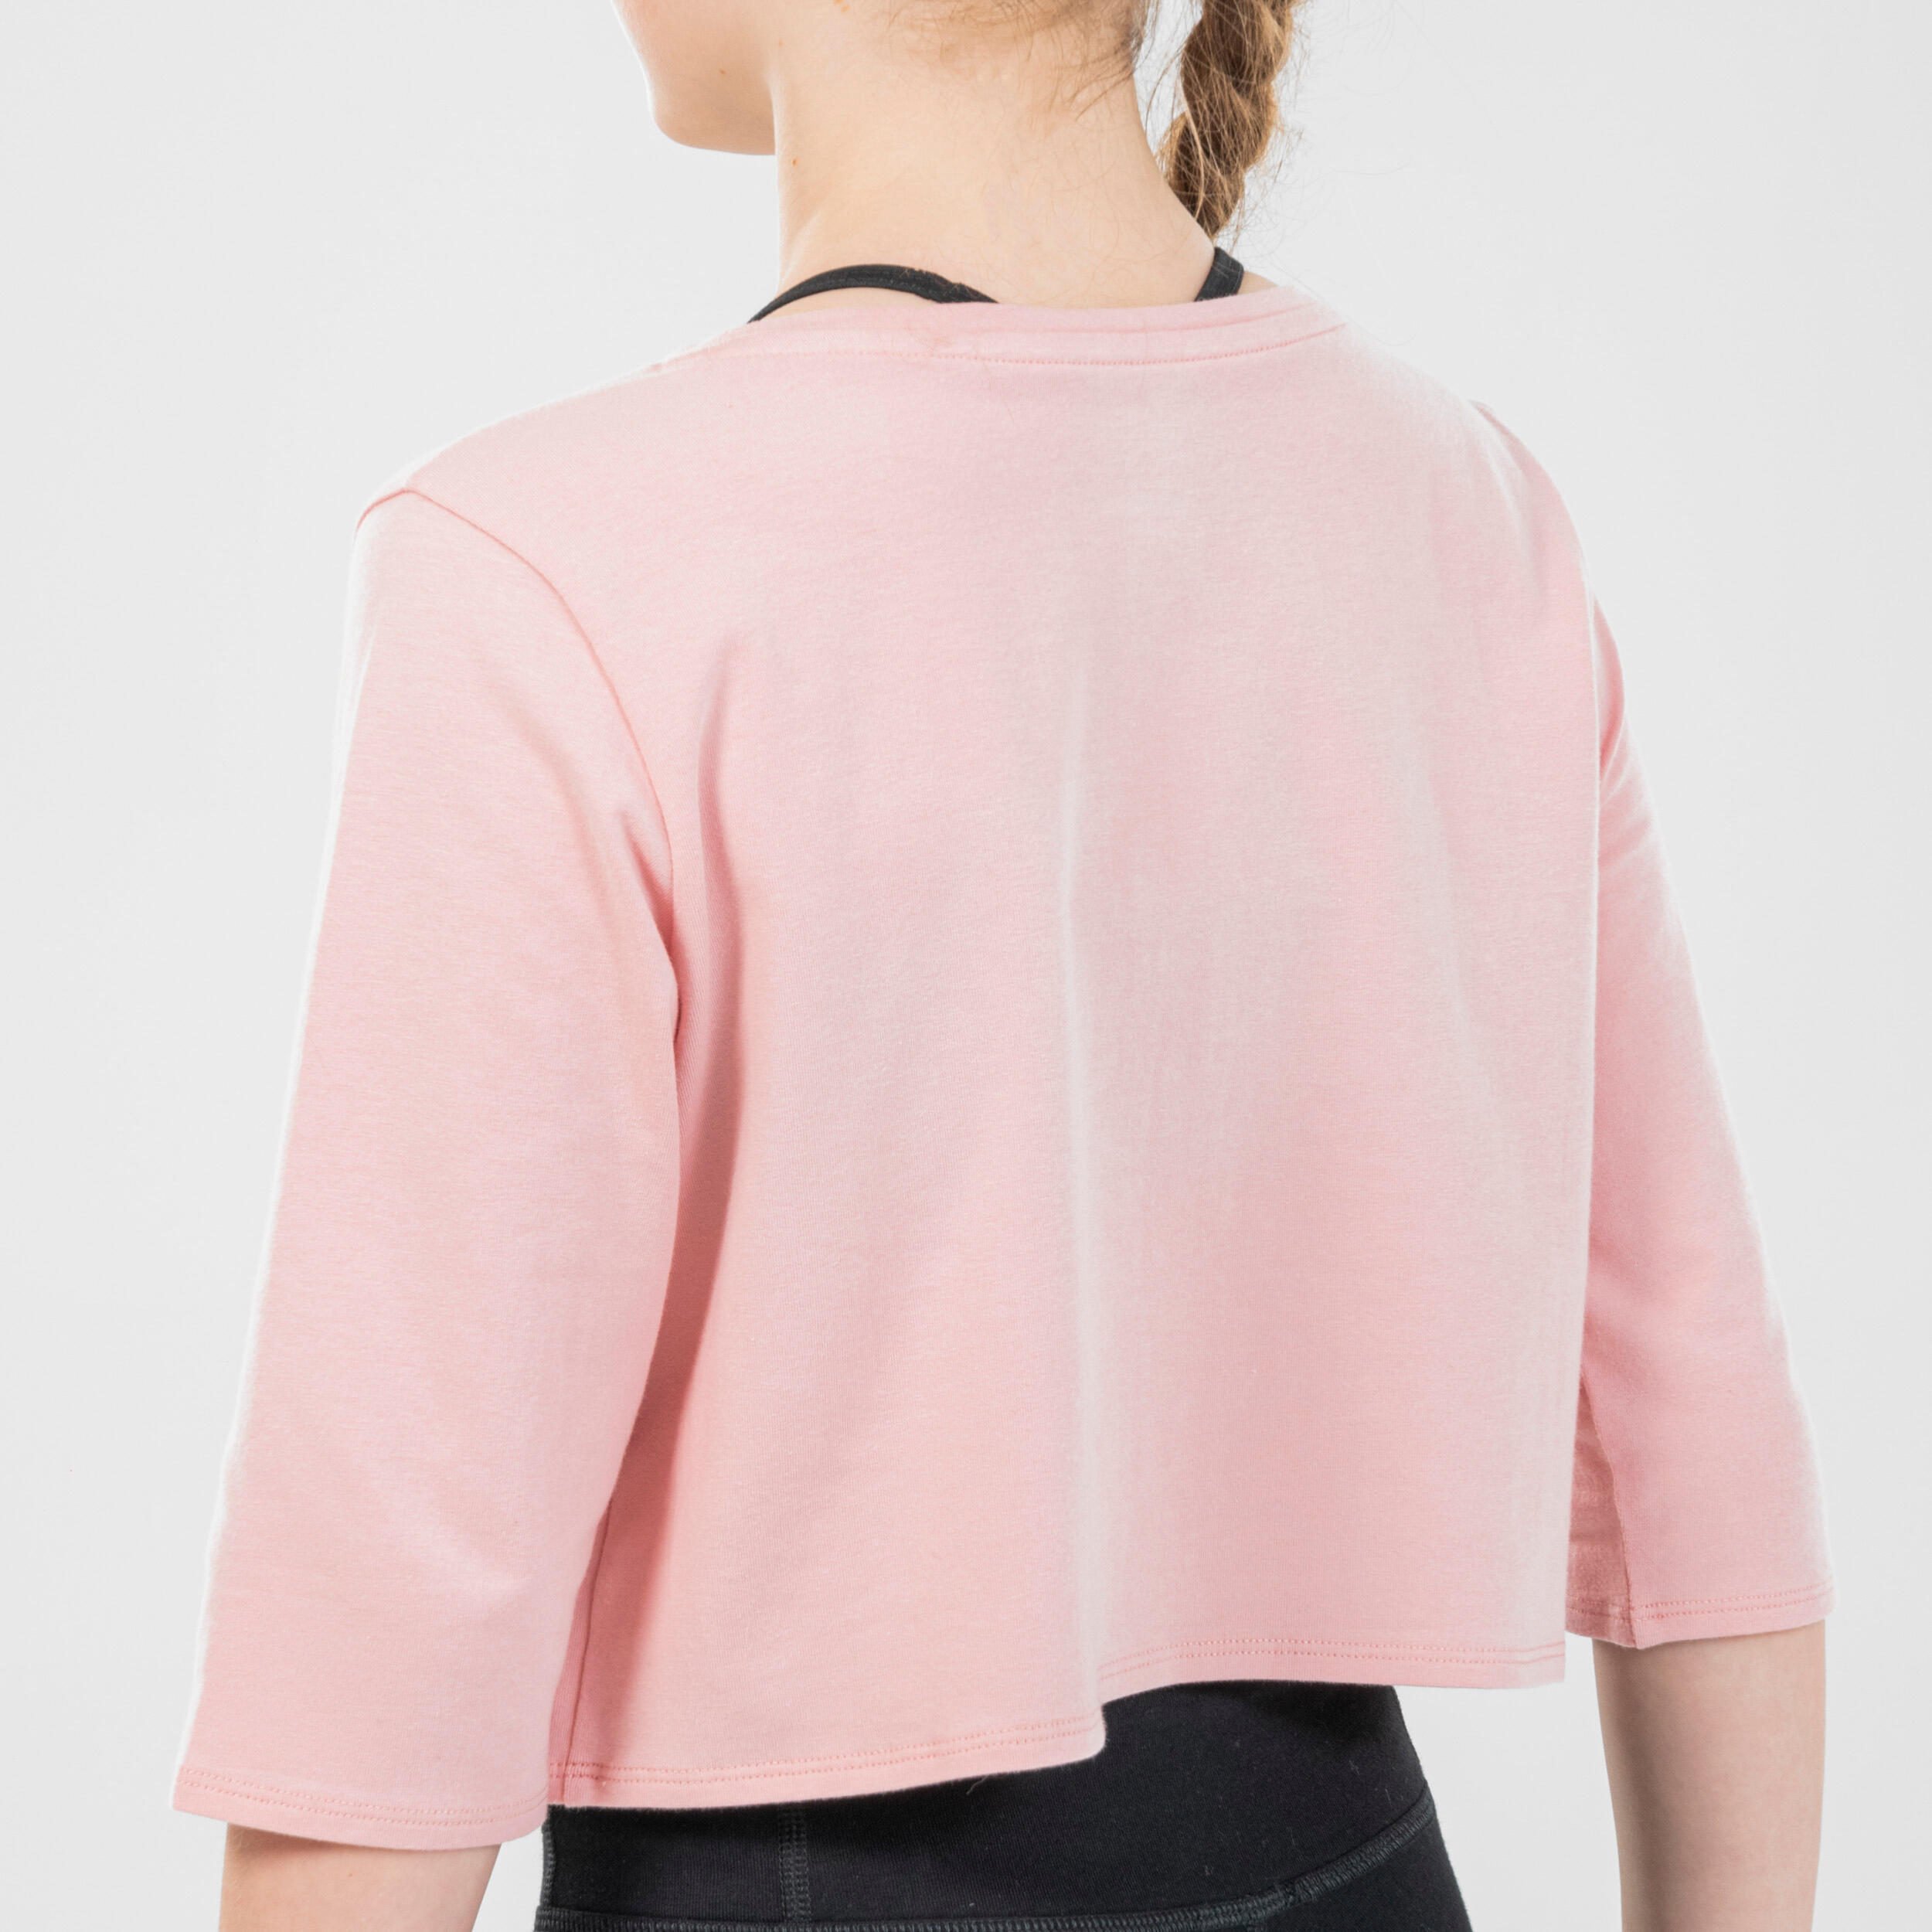 Girls' Modern Dance Cropped T-Shirt - Pink 5/6